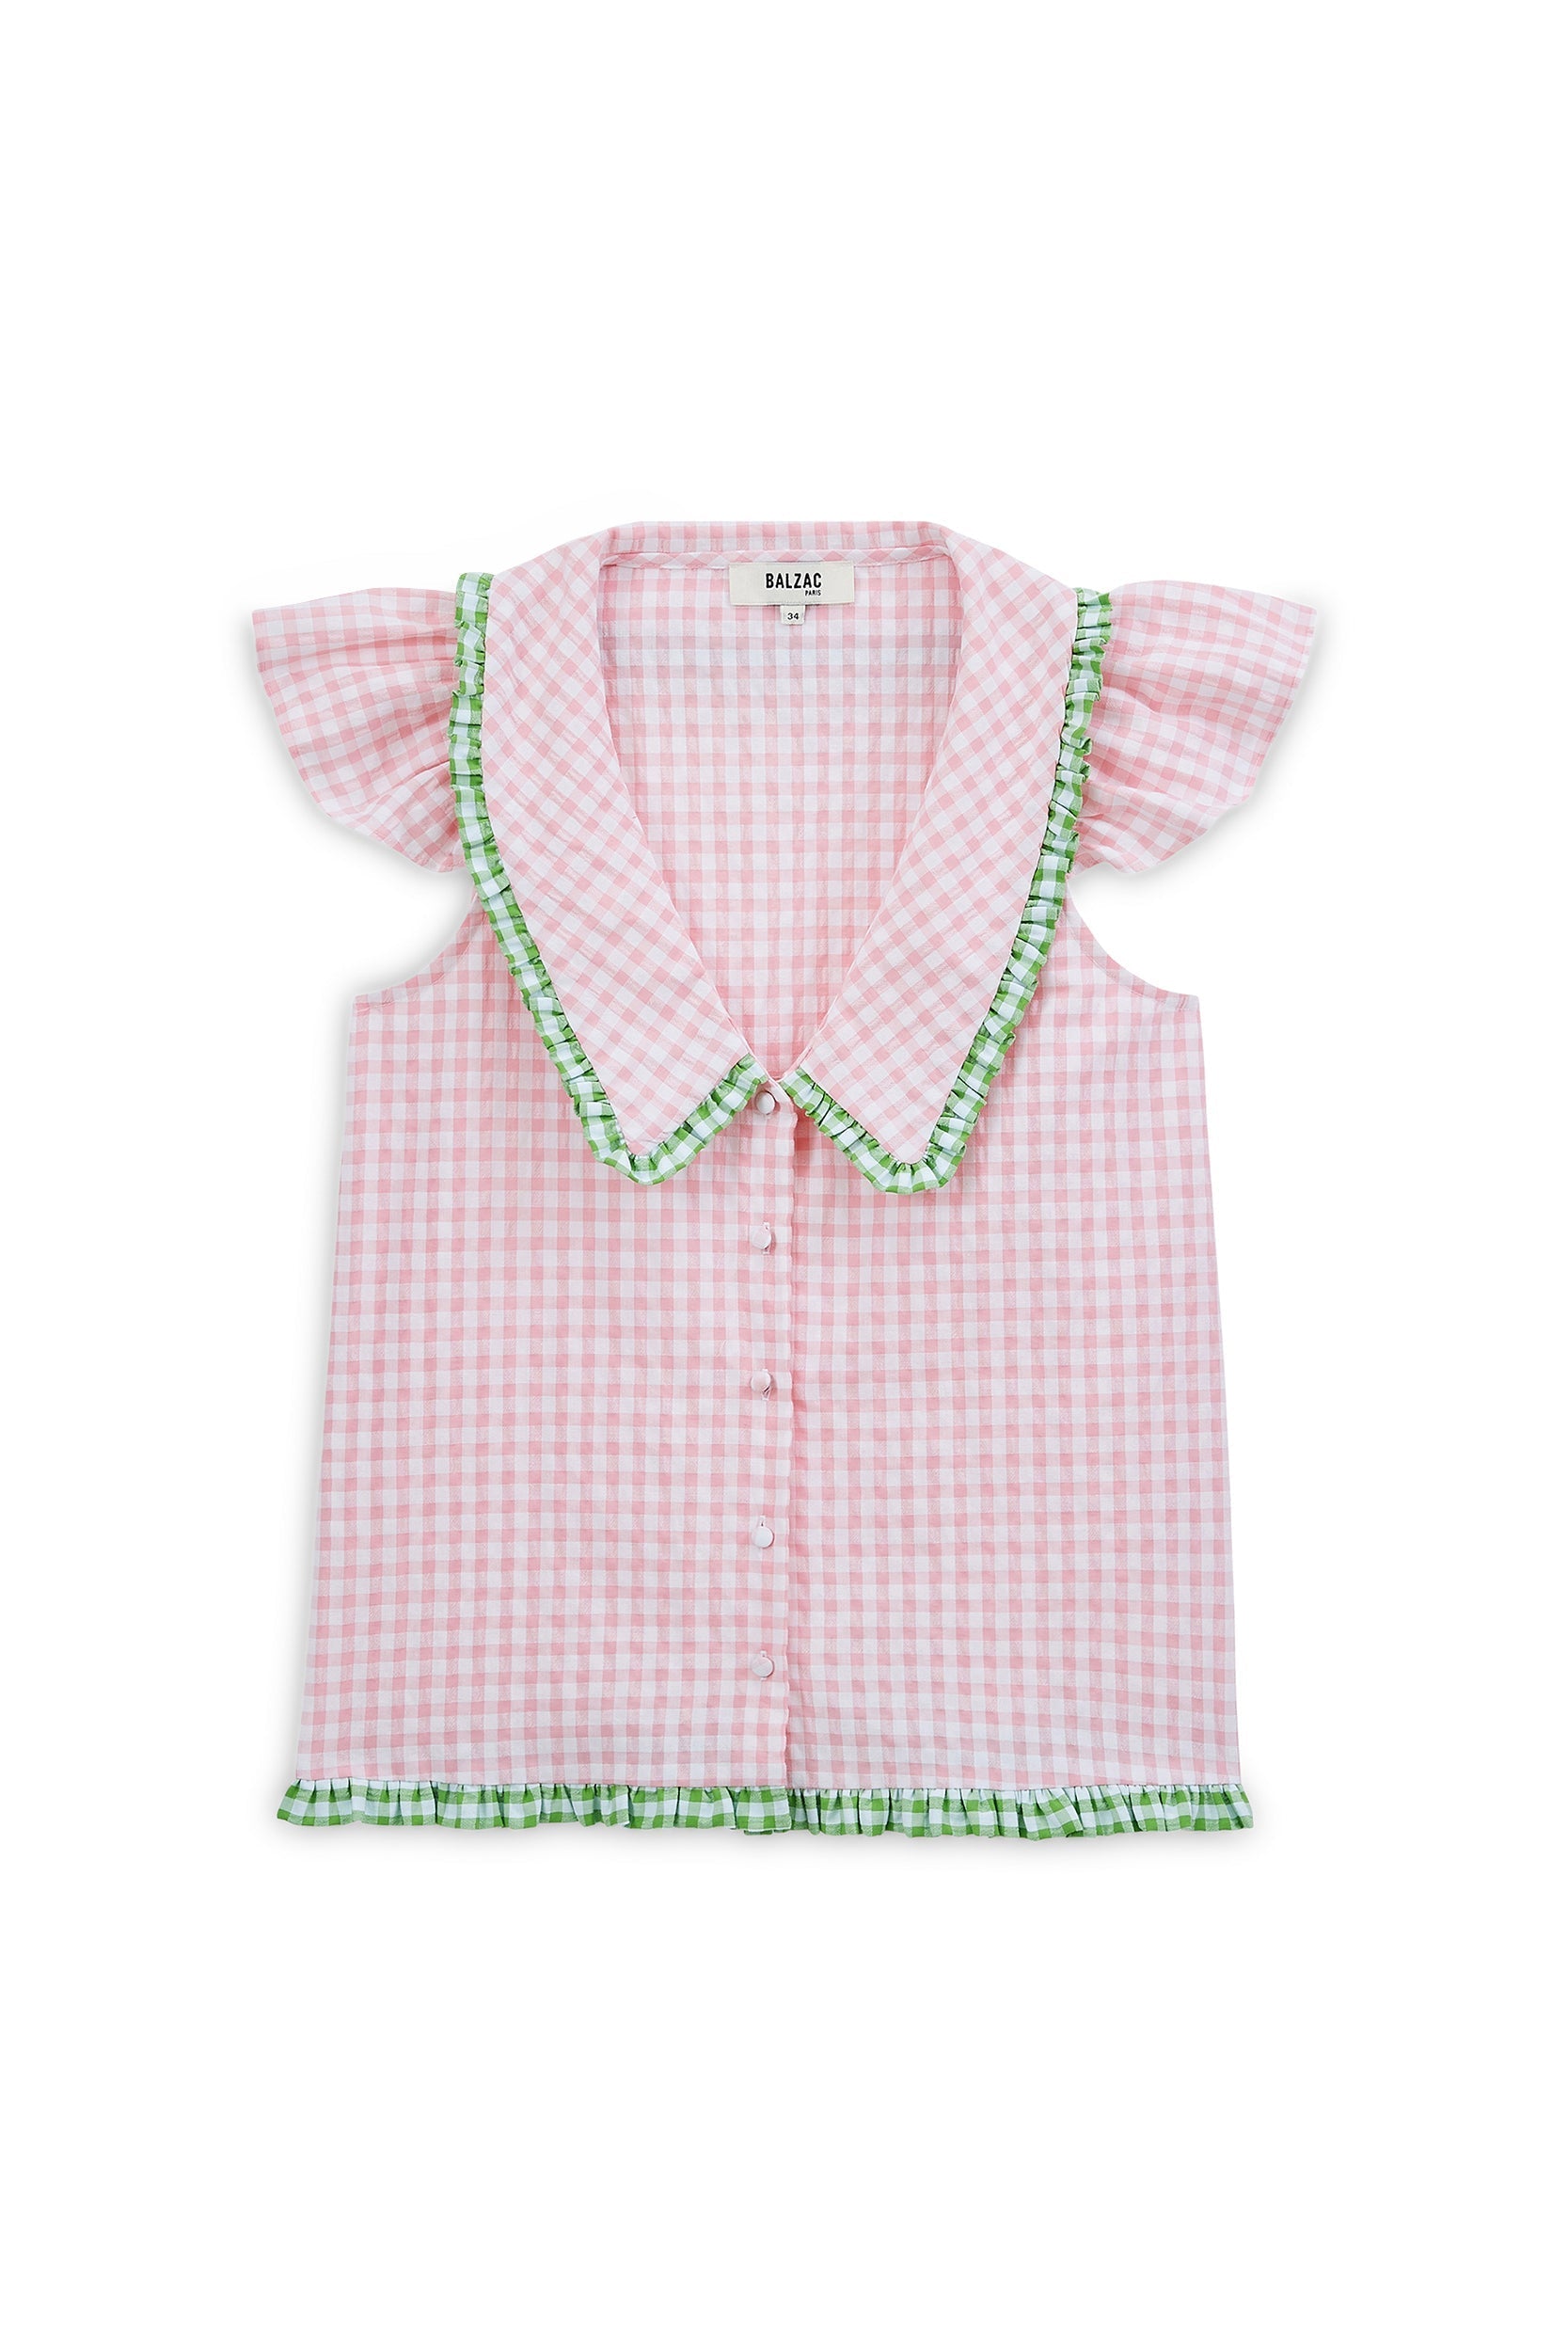 Pink gingham nostalgia blouse